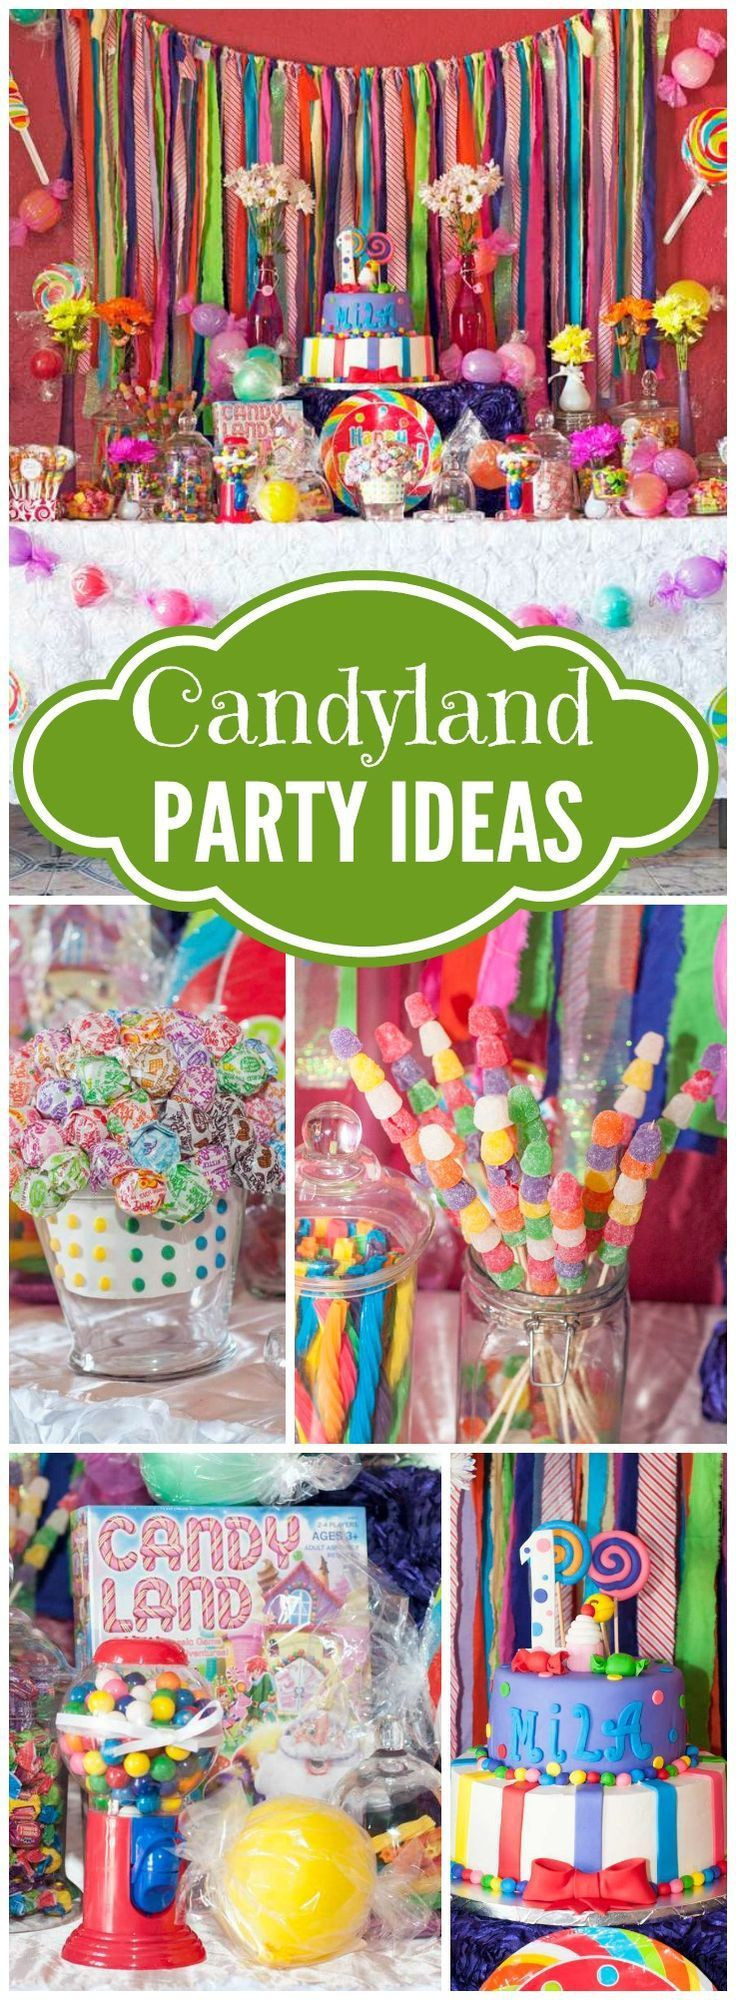 Candyland Birthday Party Ideas
 Candyland Birthday "Mila s 1st Candyland"